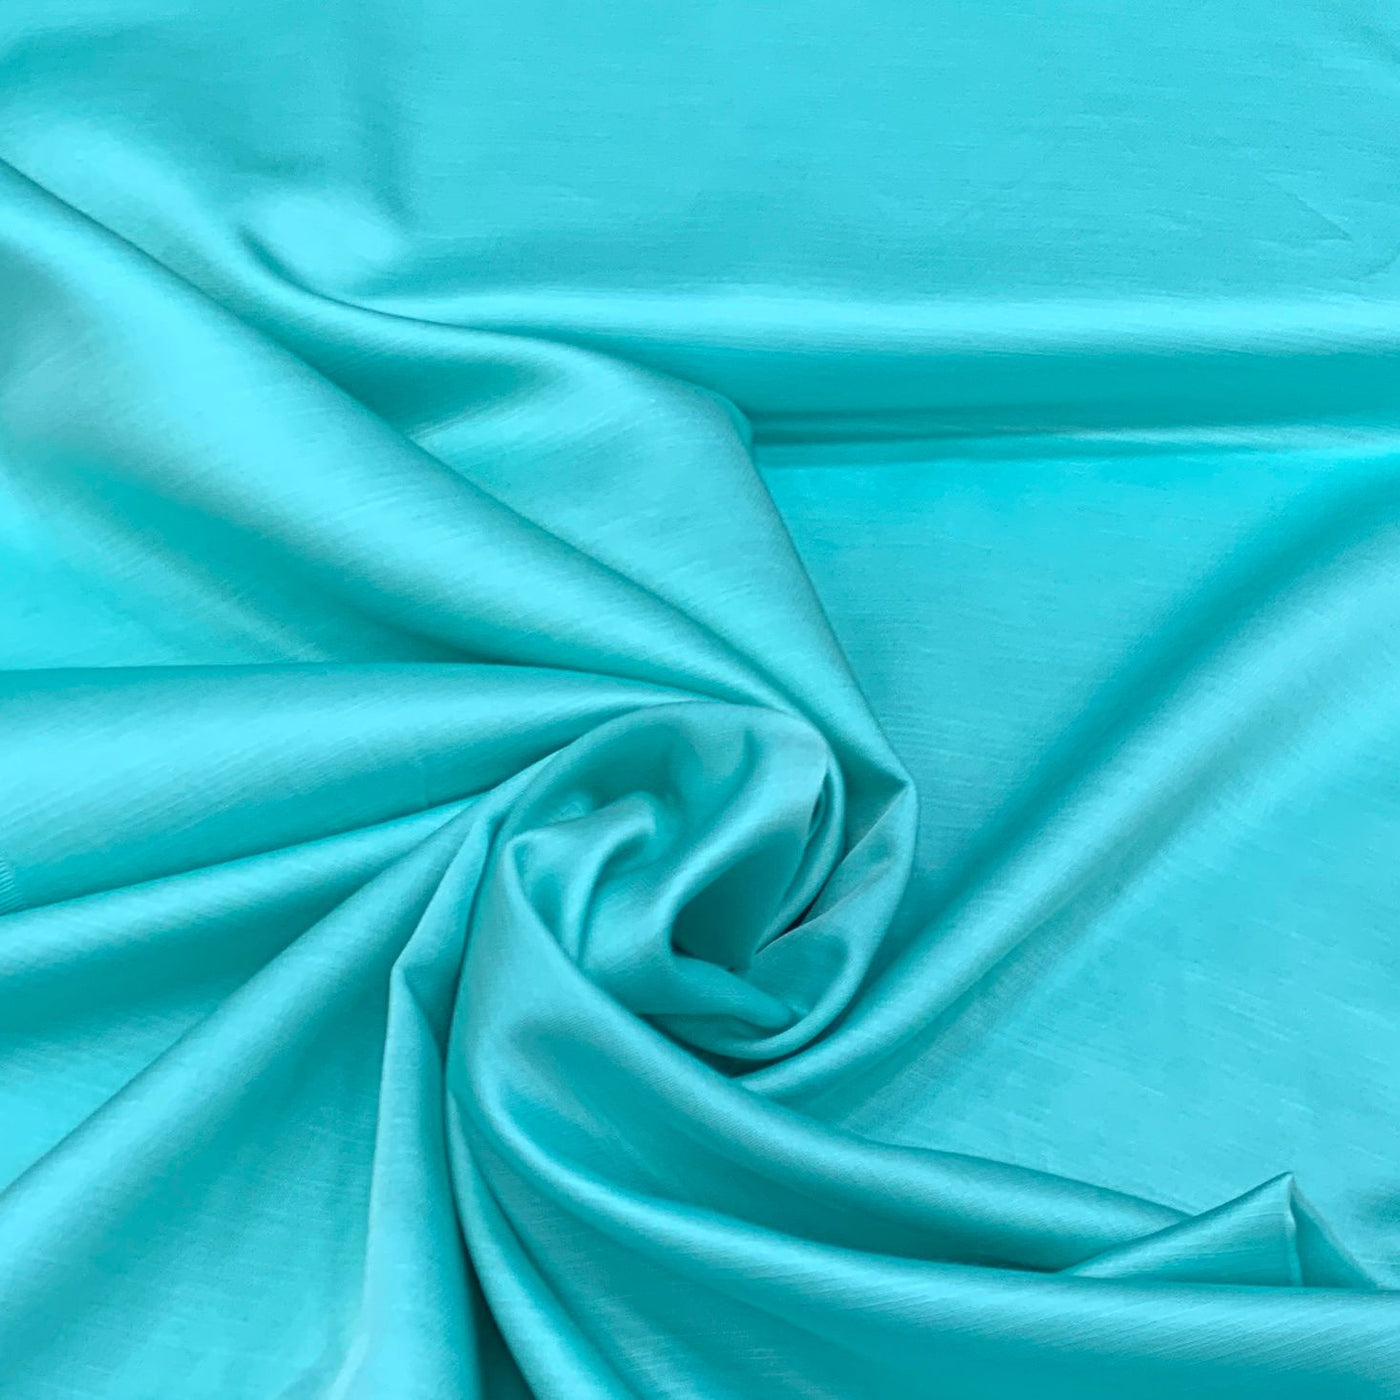 Turquoise Blue Plain Satin Linen Fabric